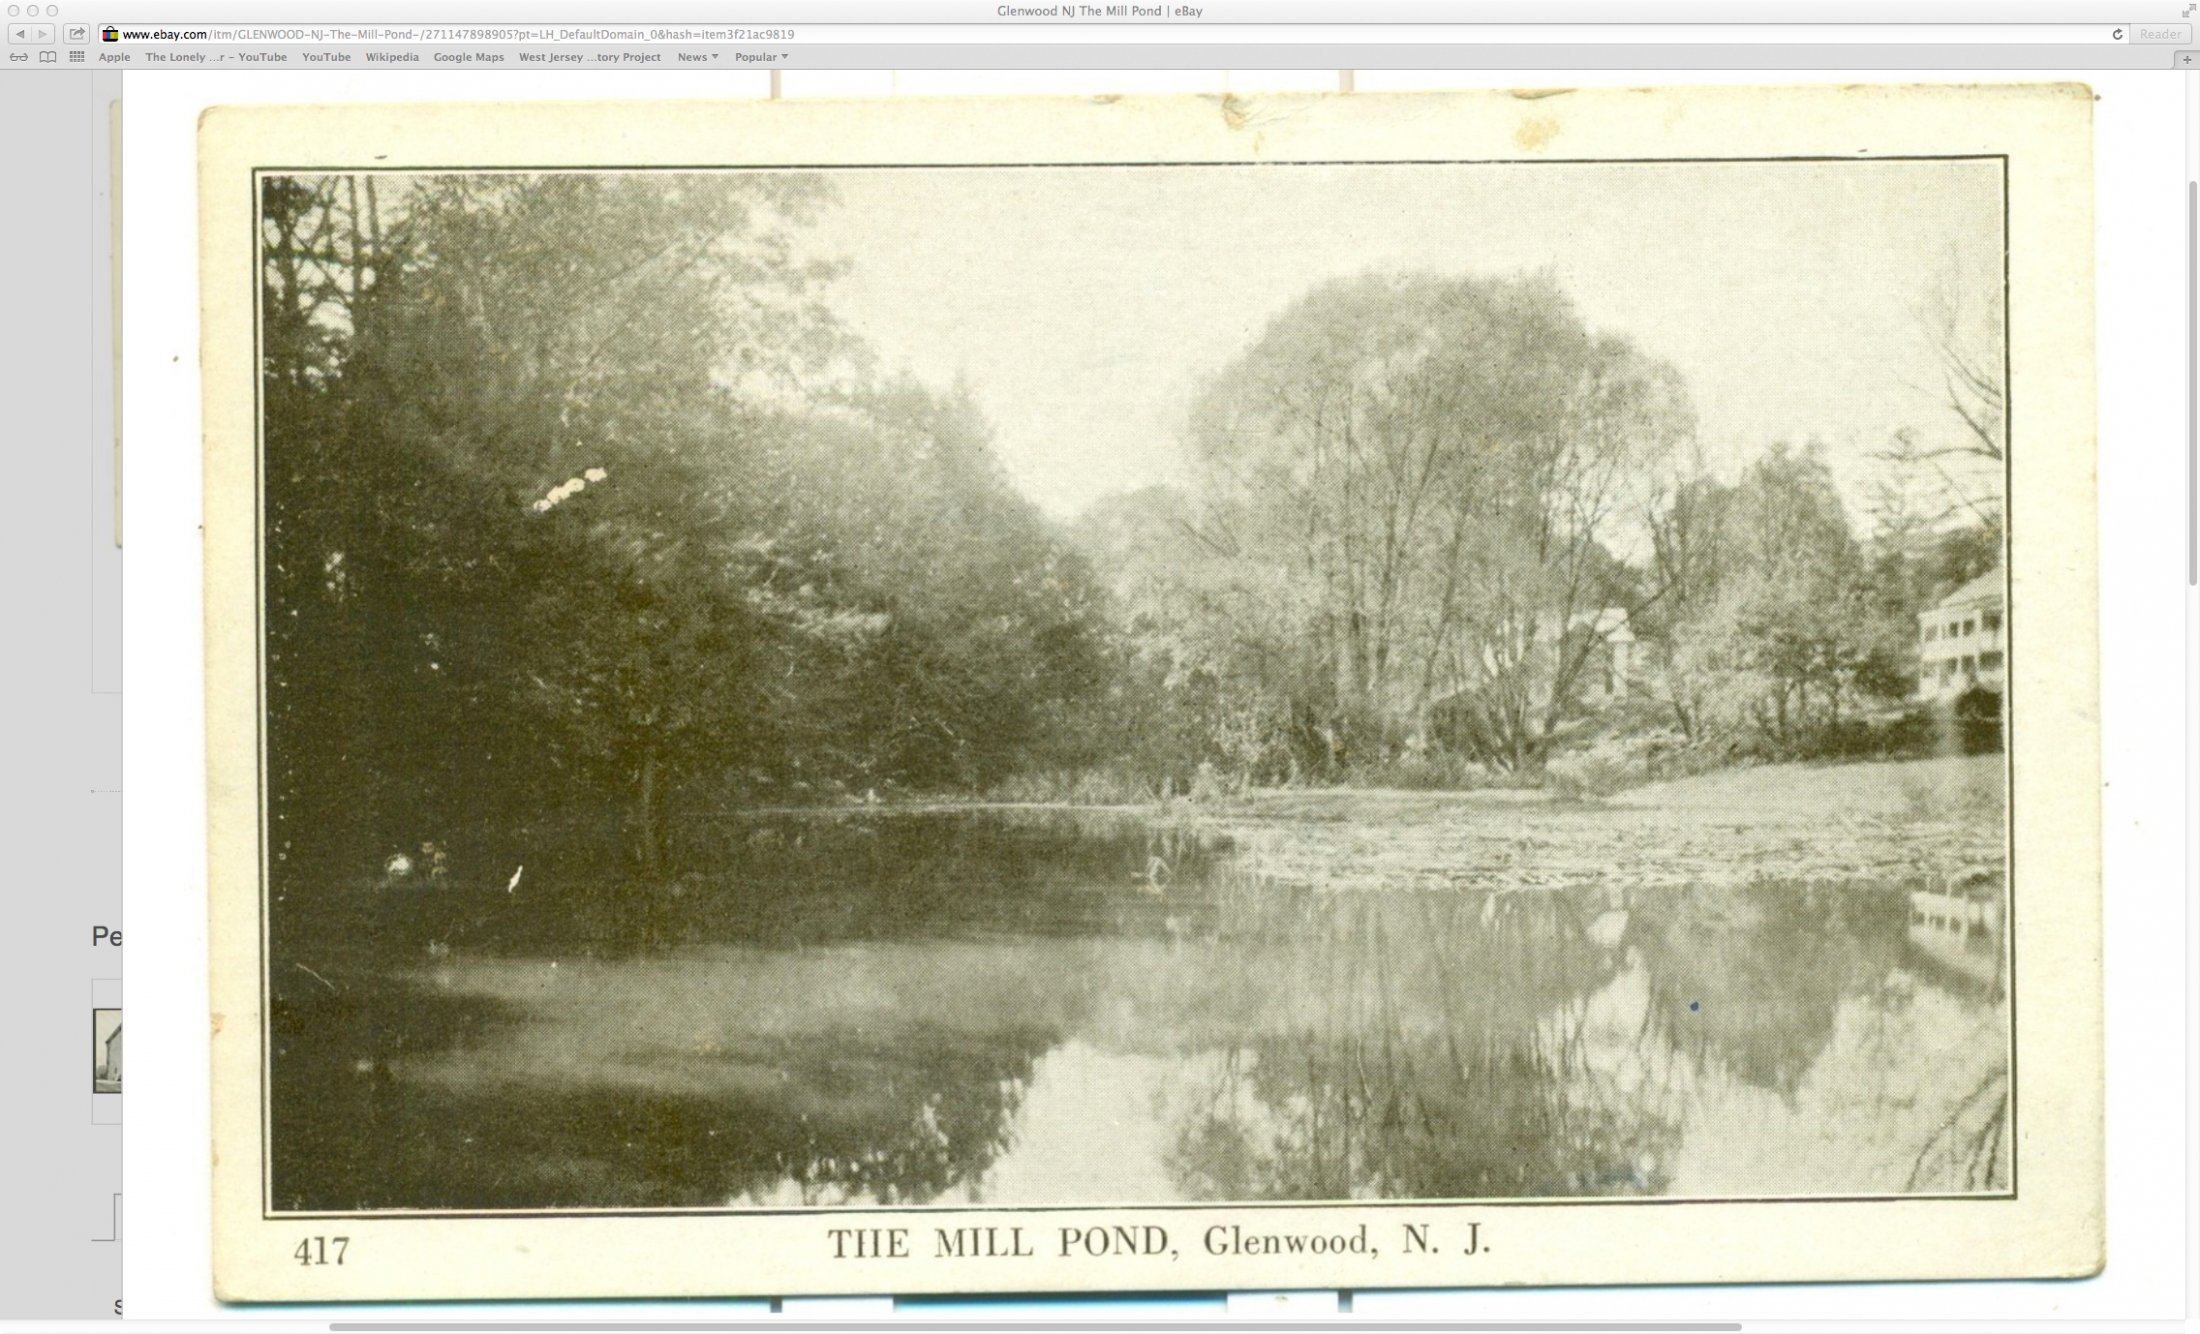 Glenwood - The Millpond - 1910s